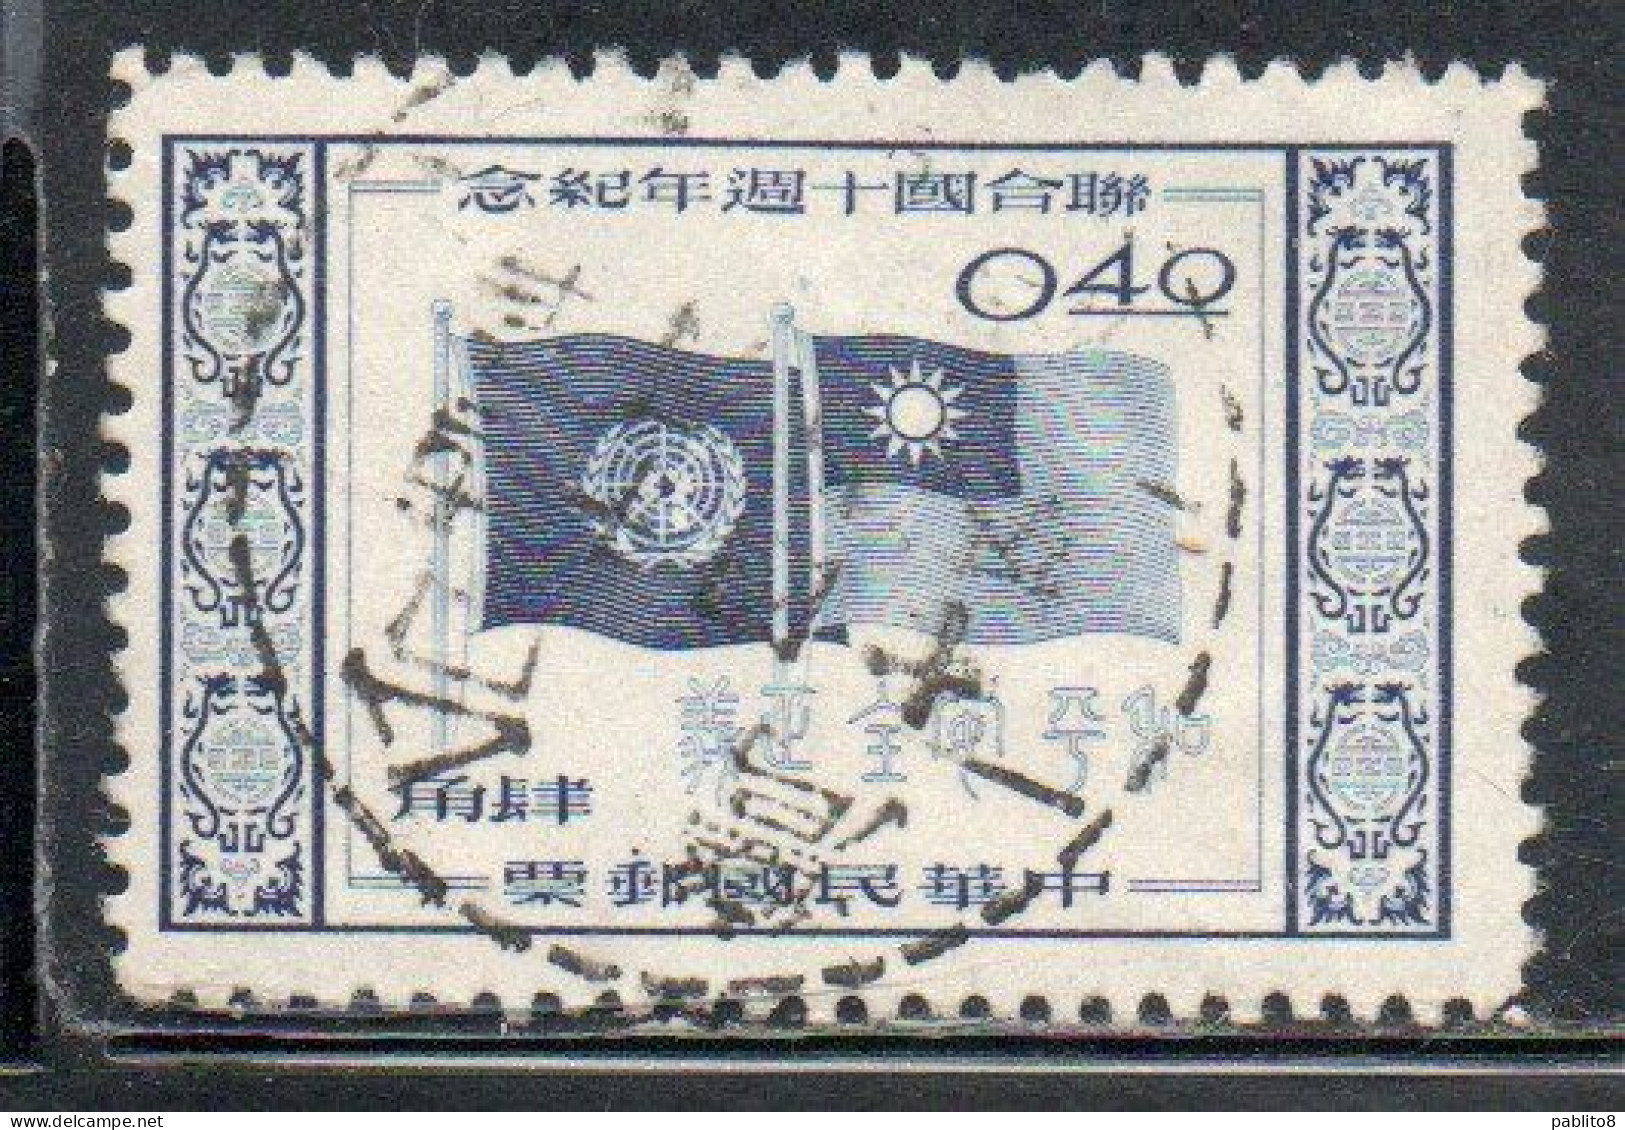 CHINA REPUBLIC CINA TAIWAN FORMOSA 1955 UN ONU ANNIVERSARY FLAGS 40c USED USATO OBLITERE' - Oblitérés